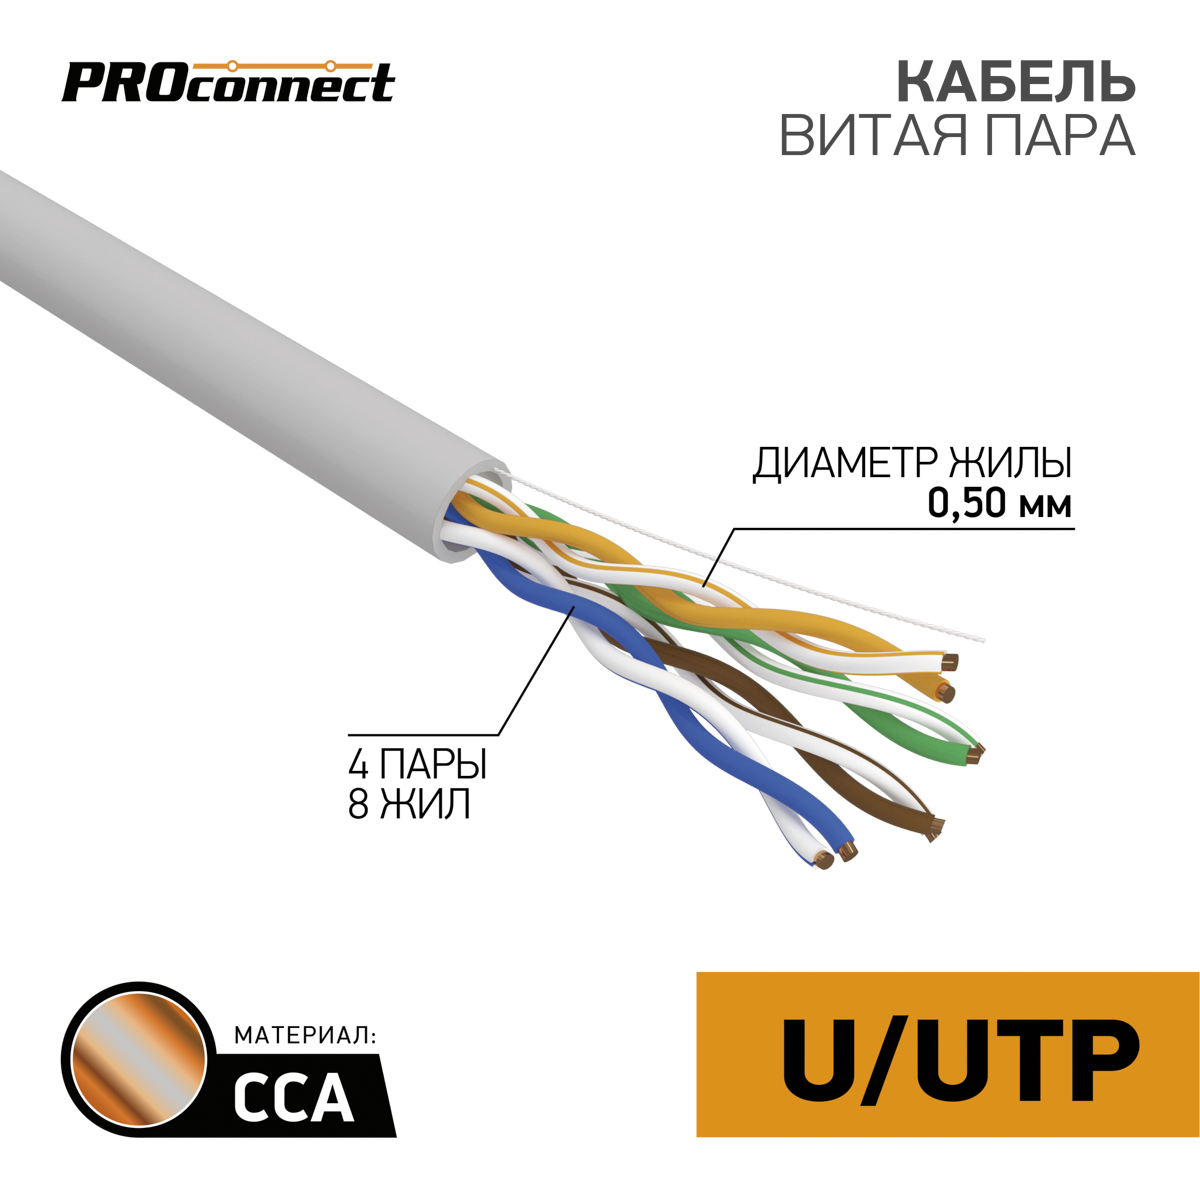 Кабель UTP 4 х 2 х 0,50 мм, CCA, cat 5e, PVC серый, 1 метр  PROCONNECT  в Самаре